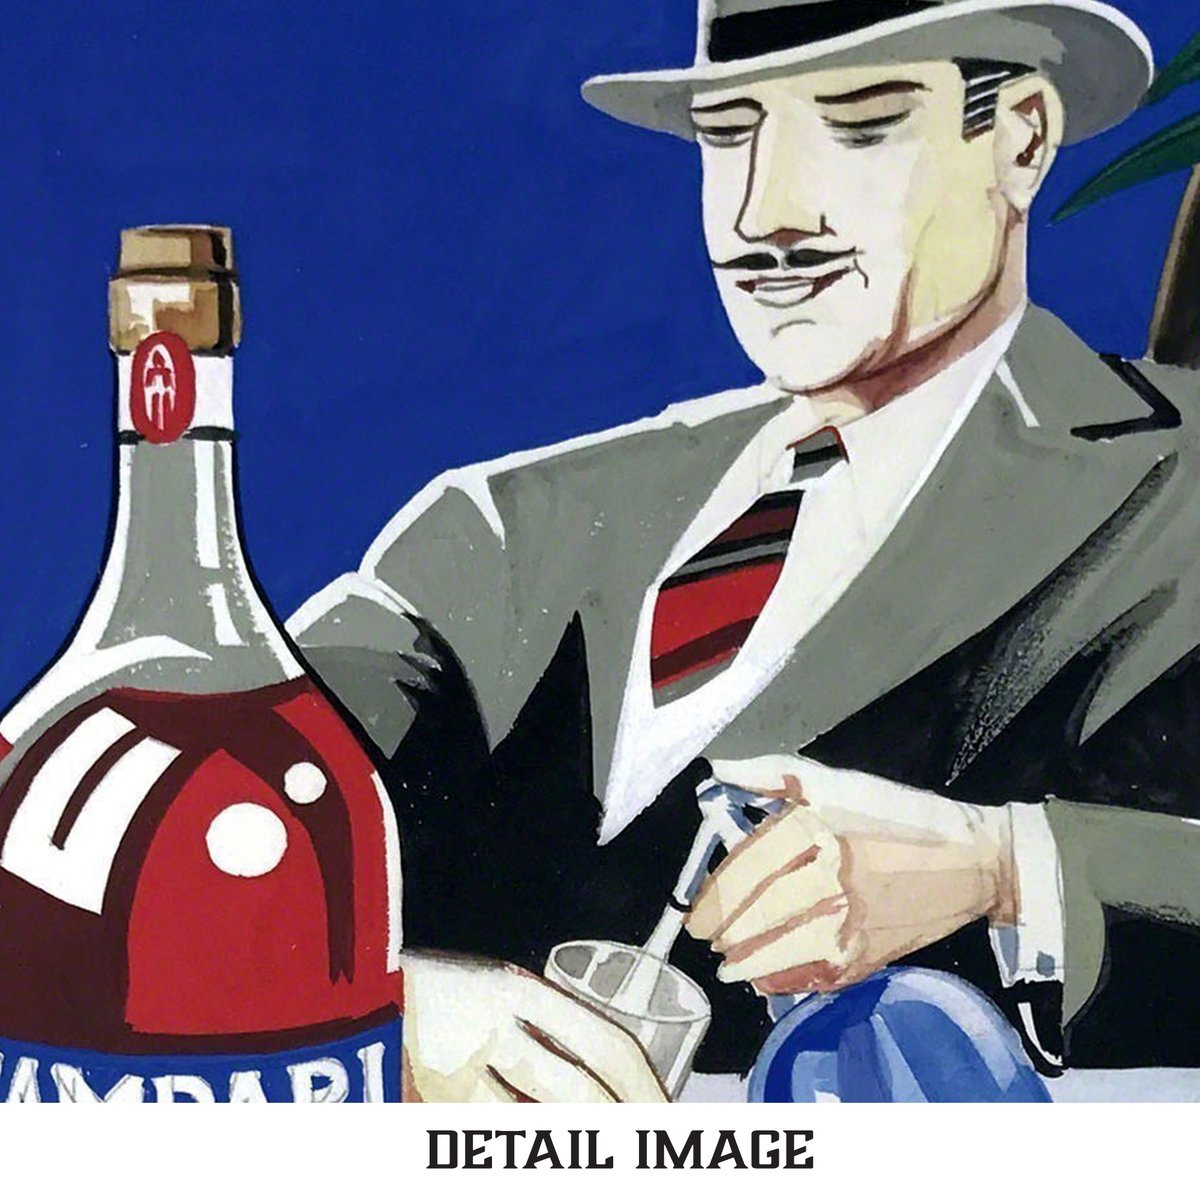 Campari Bitter l'Aperitif, 1955, Vintage Ads, Wall Art Print, Vintage  Poster